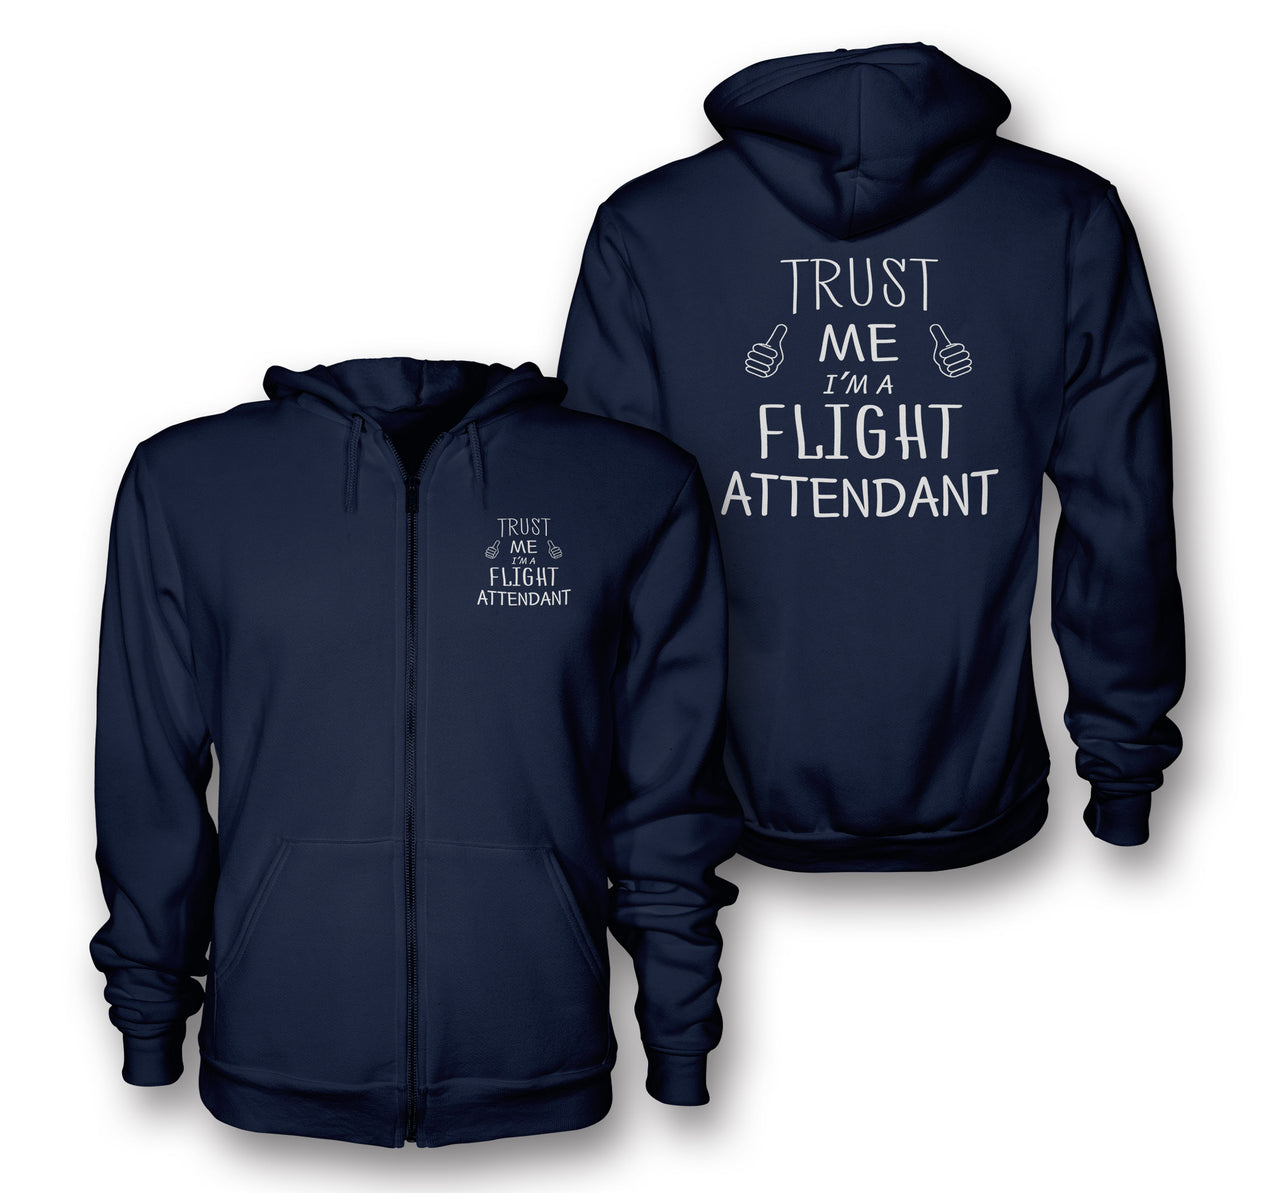 Trust Me I'm a Flight Attendant Designed Zipped Hoodies